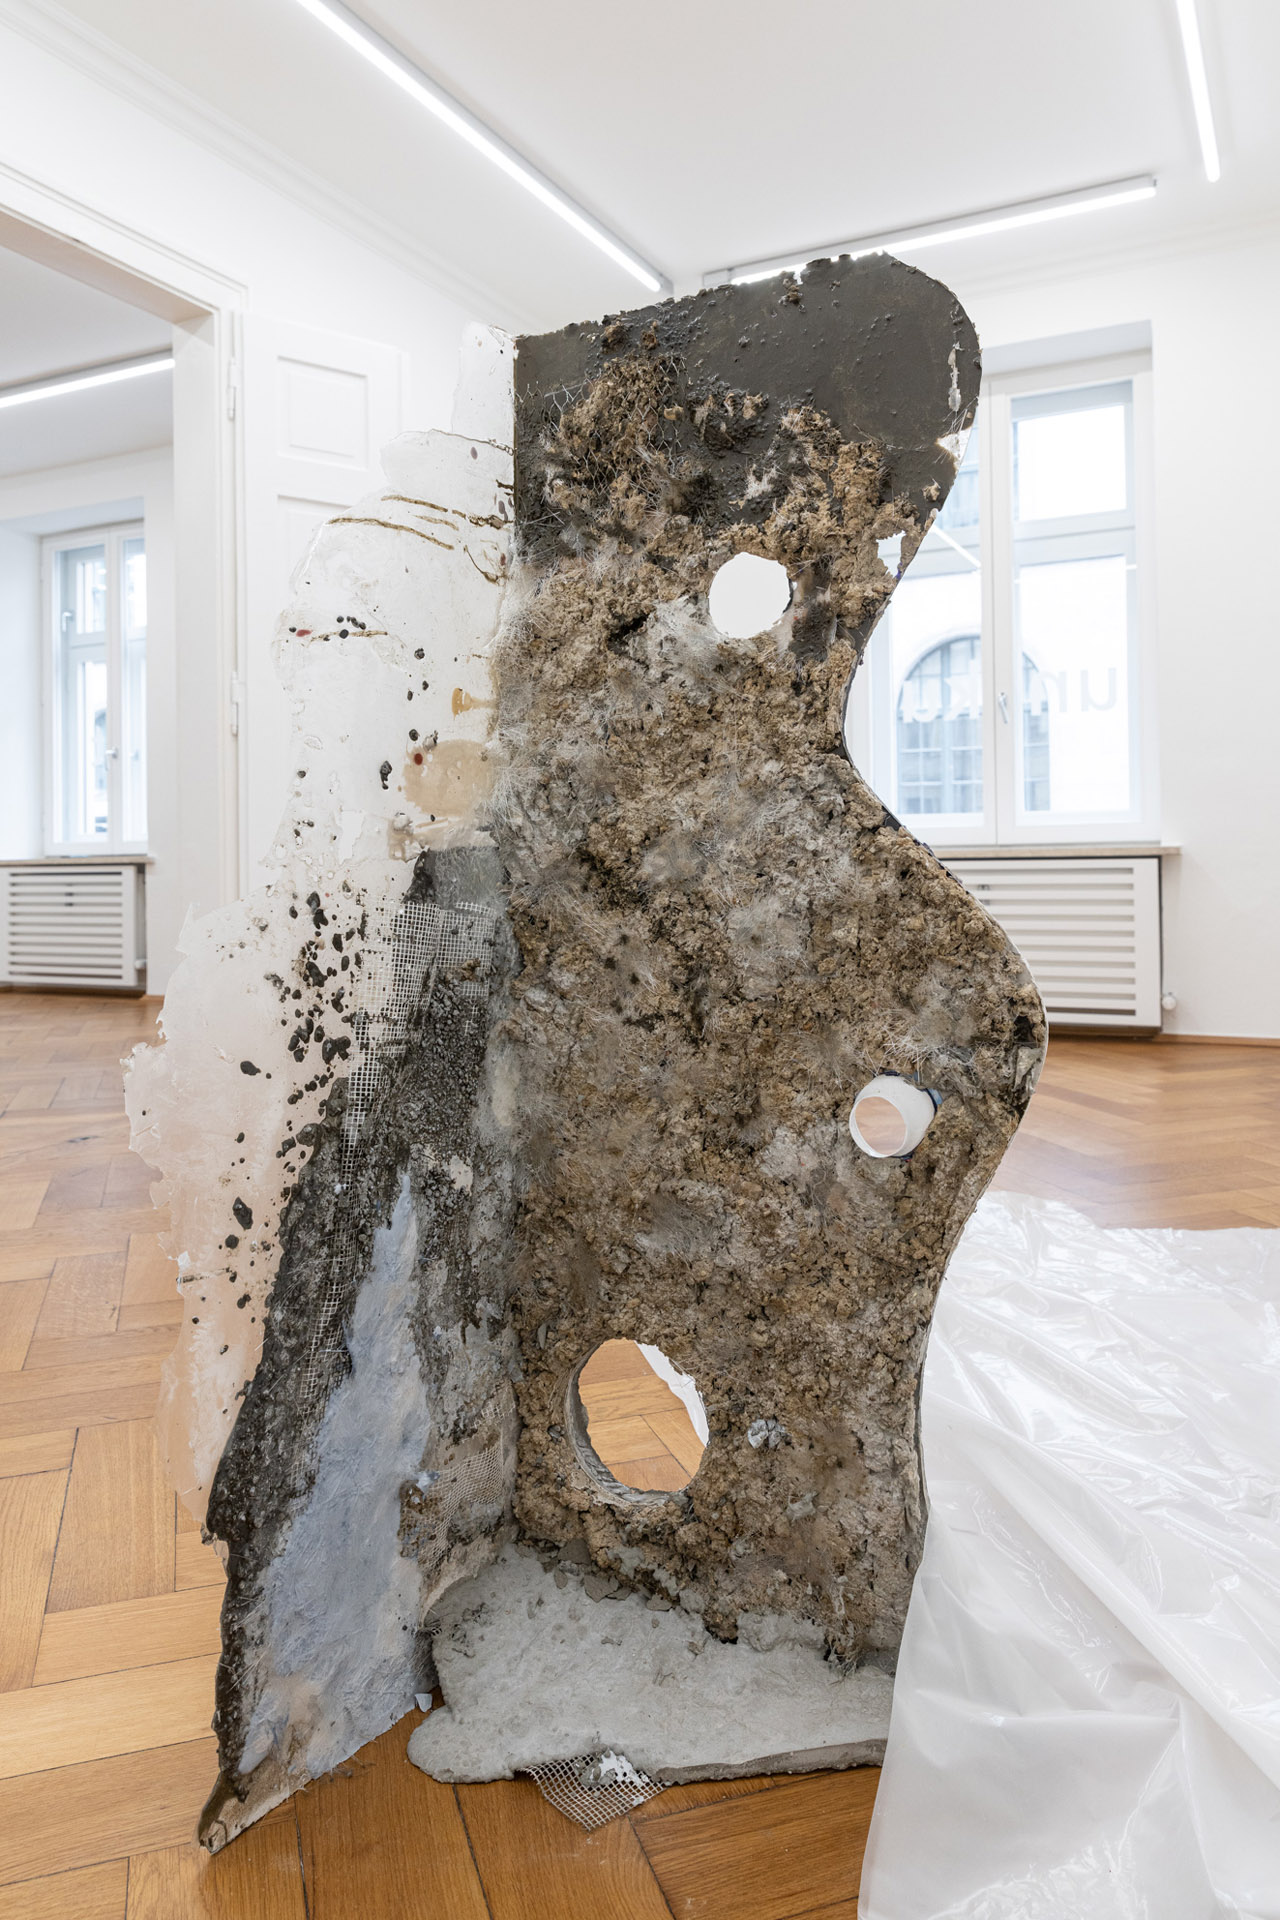 Patrick Ostrowsky at Galerie Britta Rettberg – Art Viewer